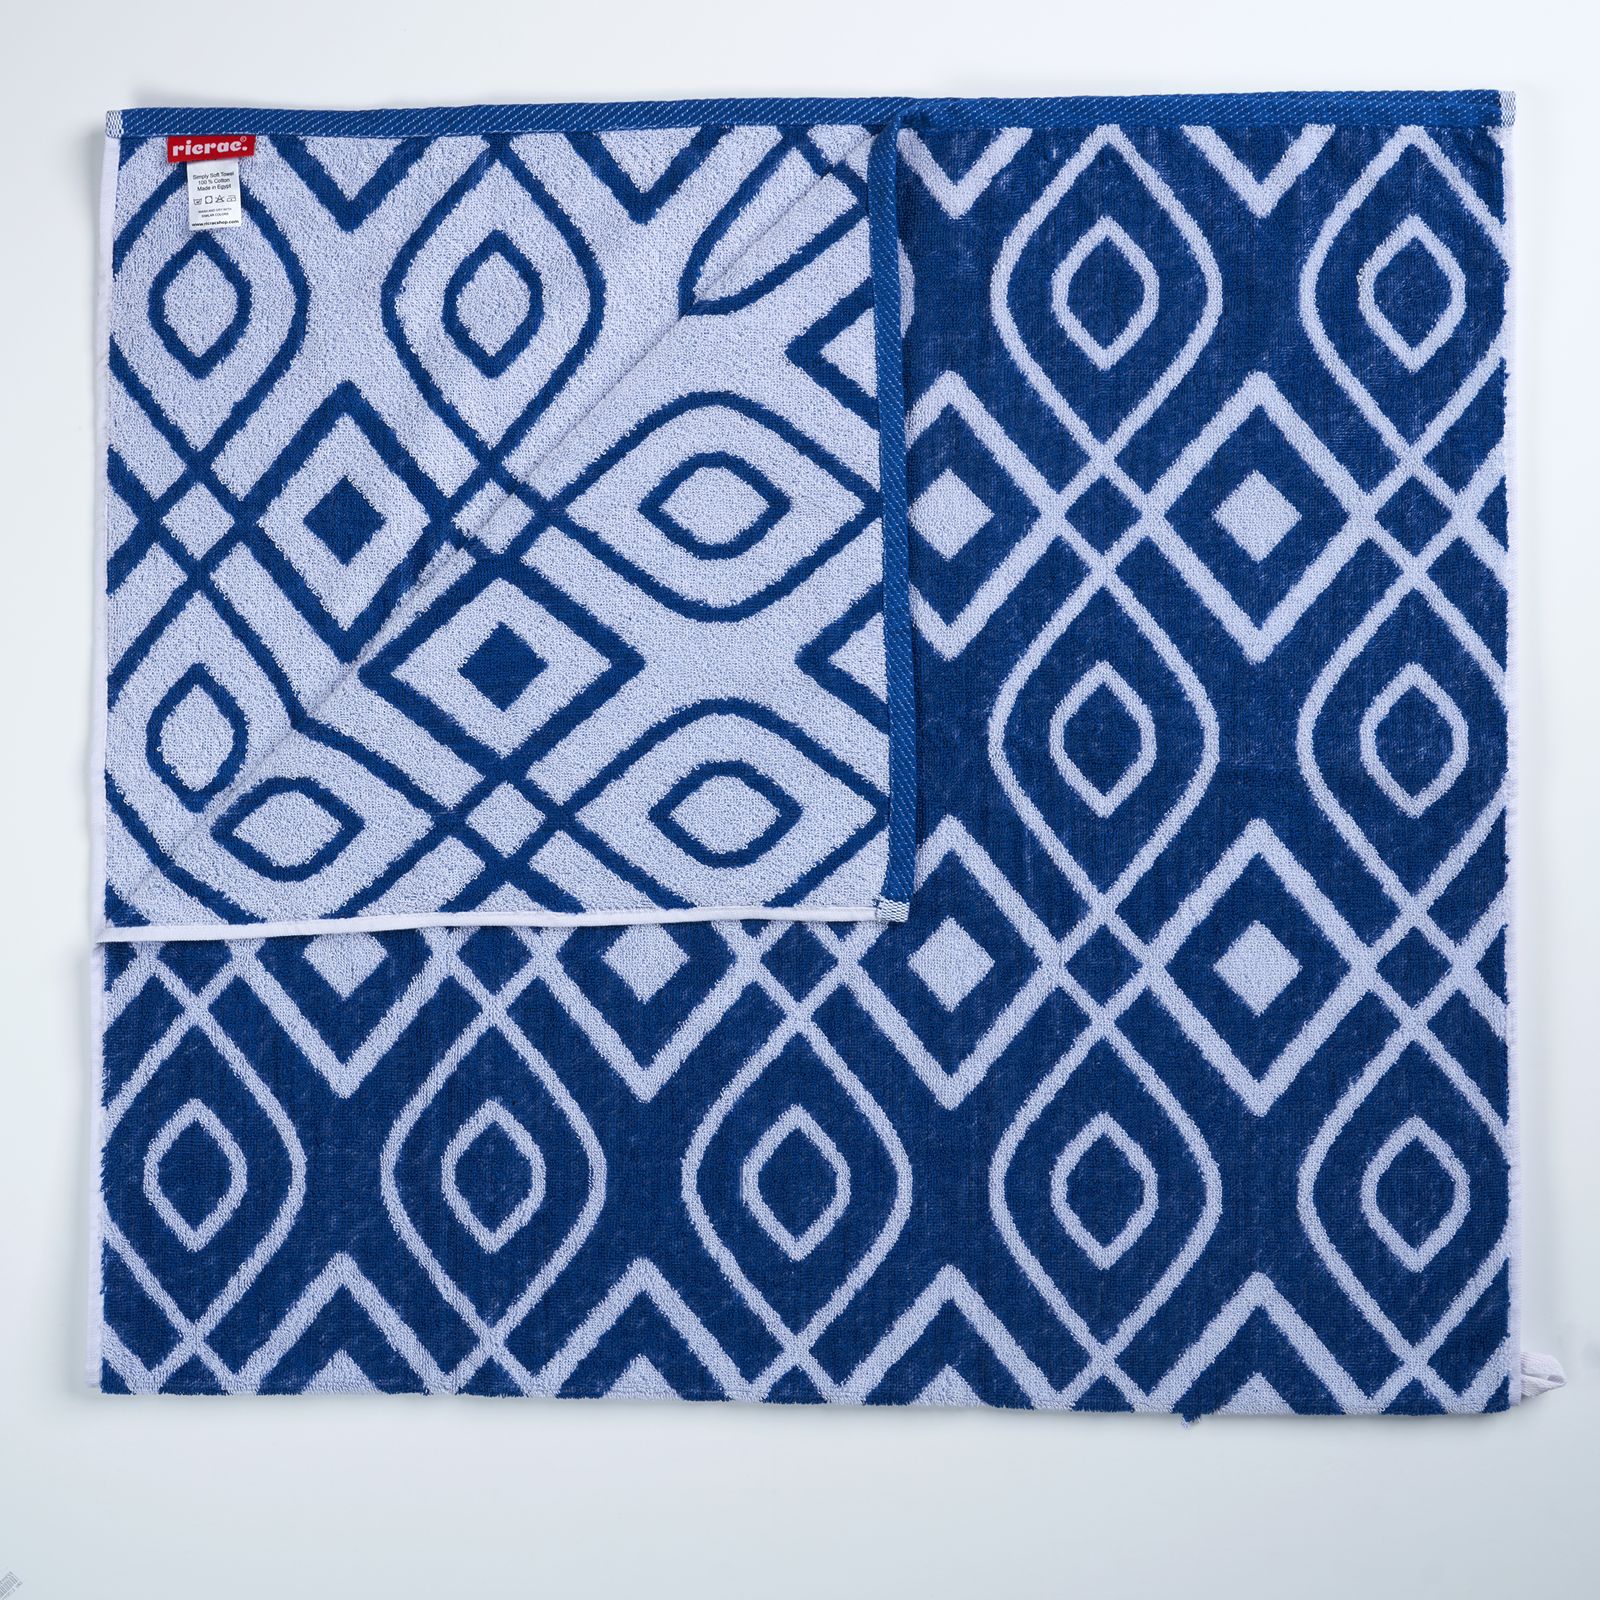 Rola- Tiles Patterns Towel